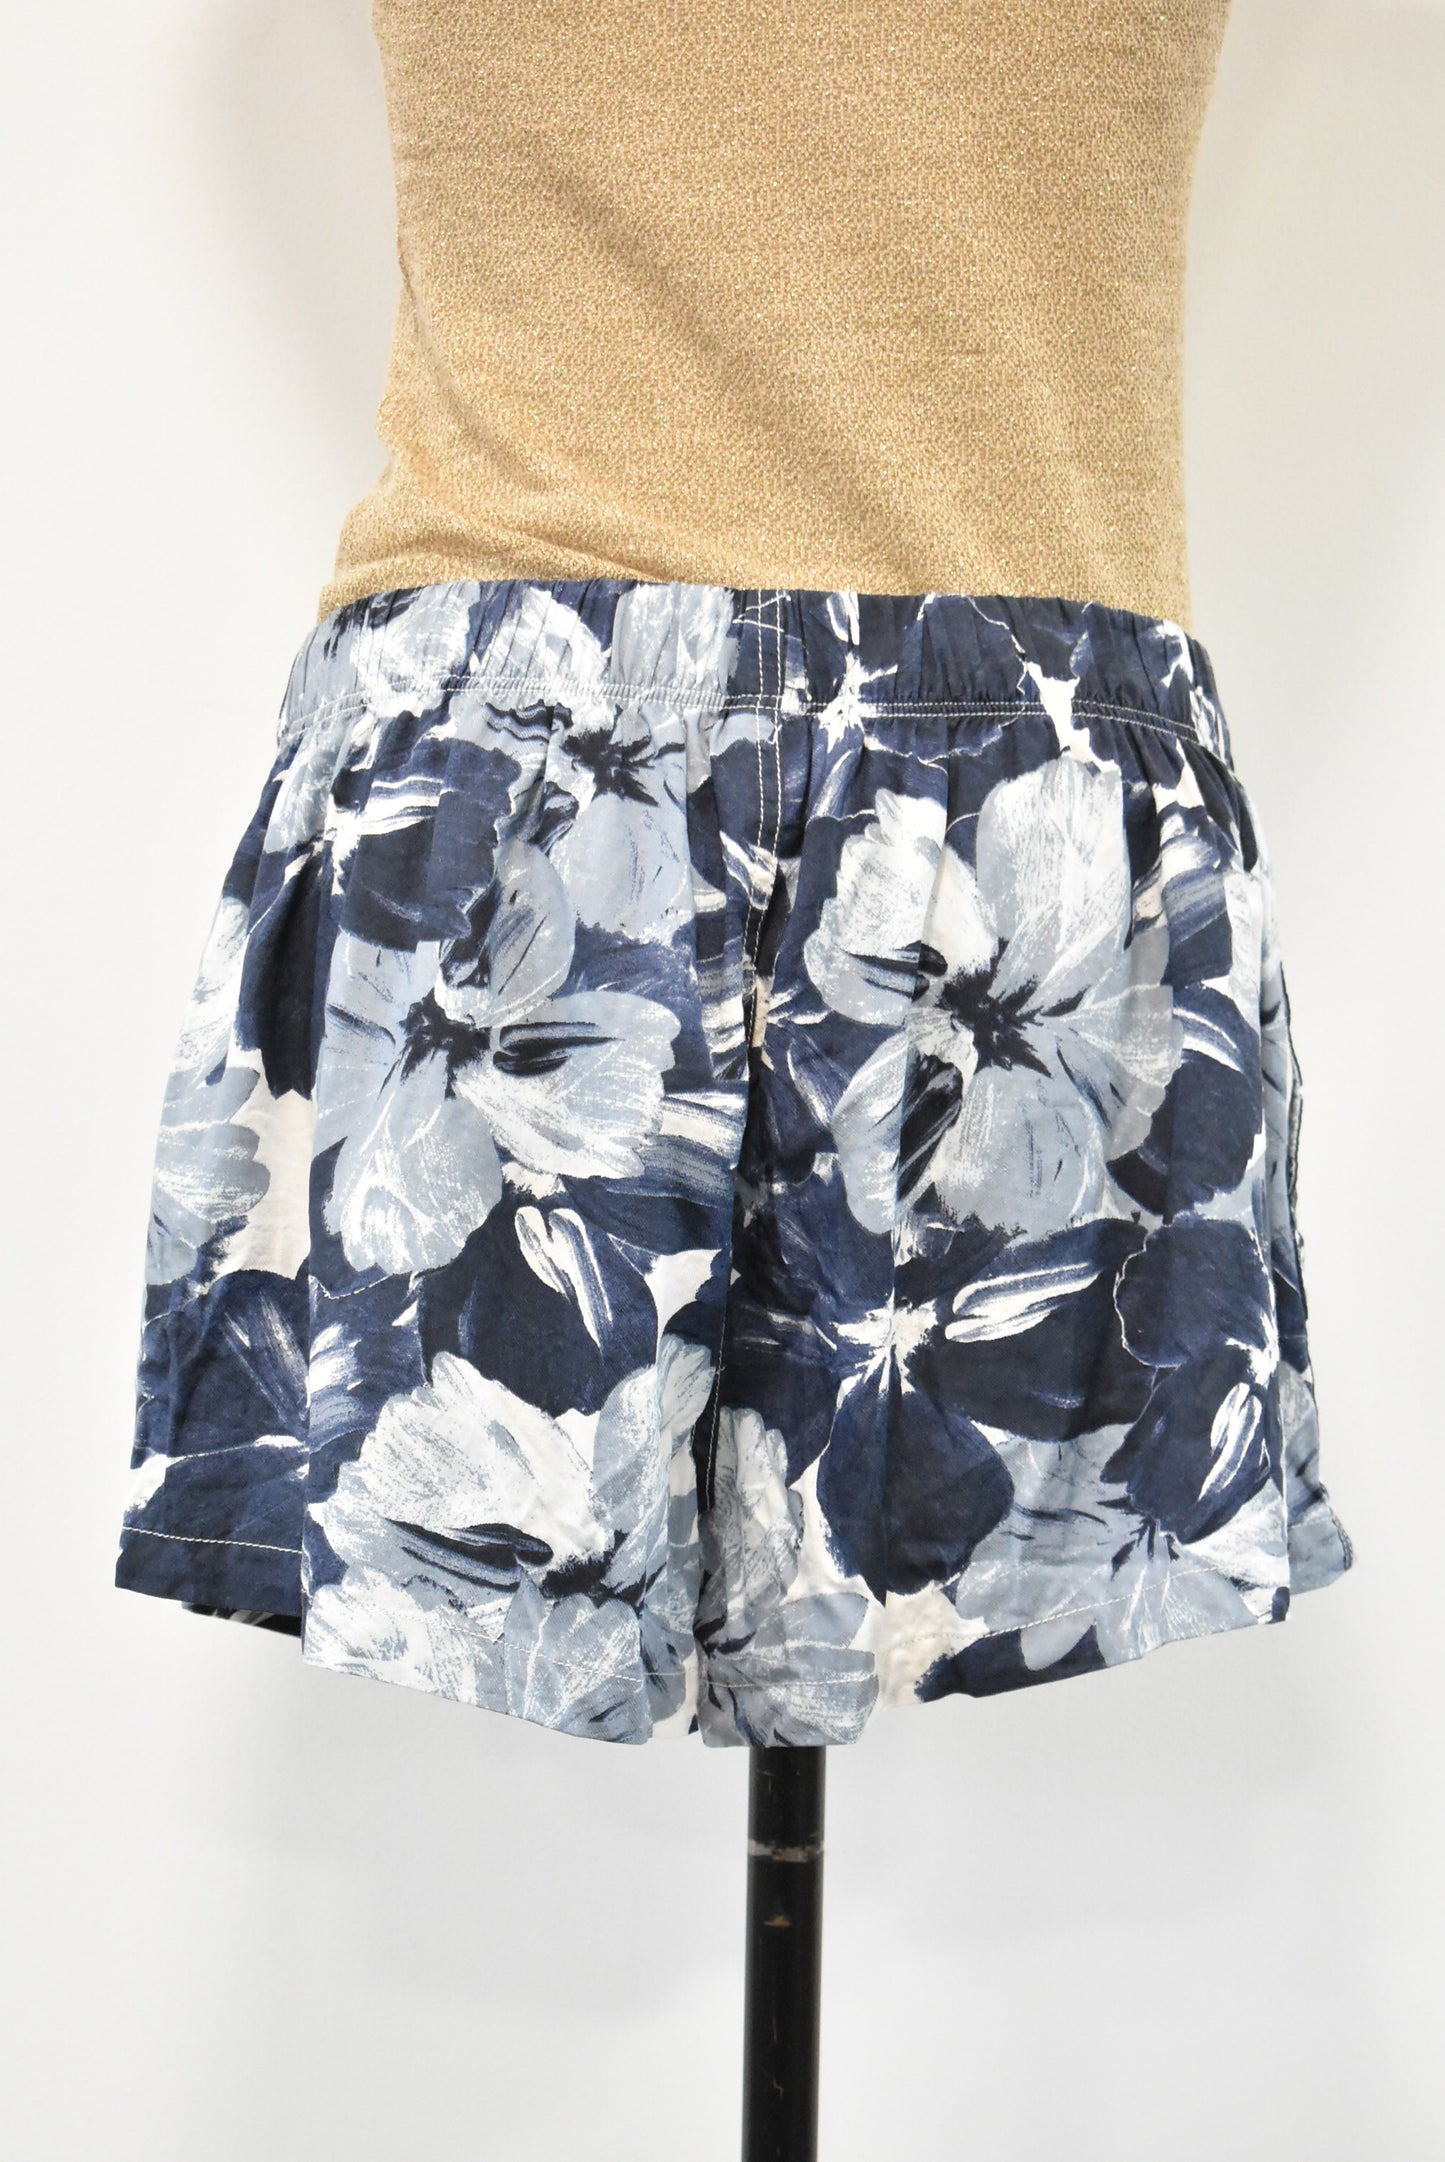 Jockey floral shorts, L